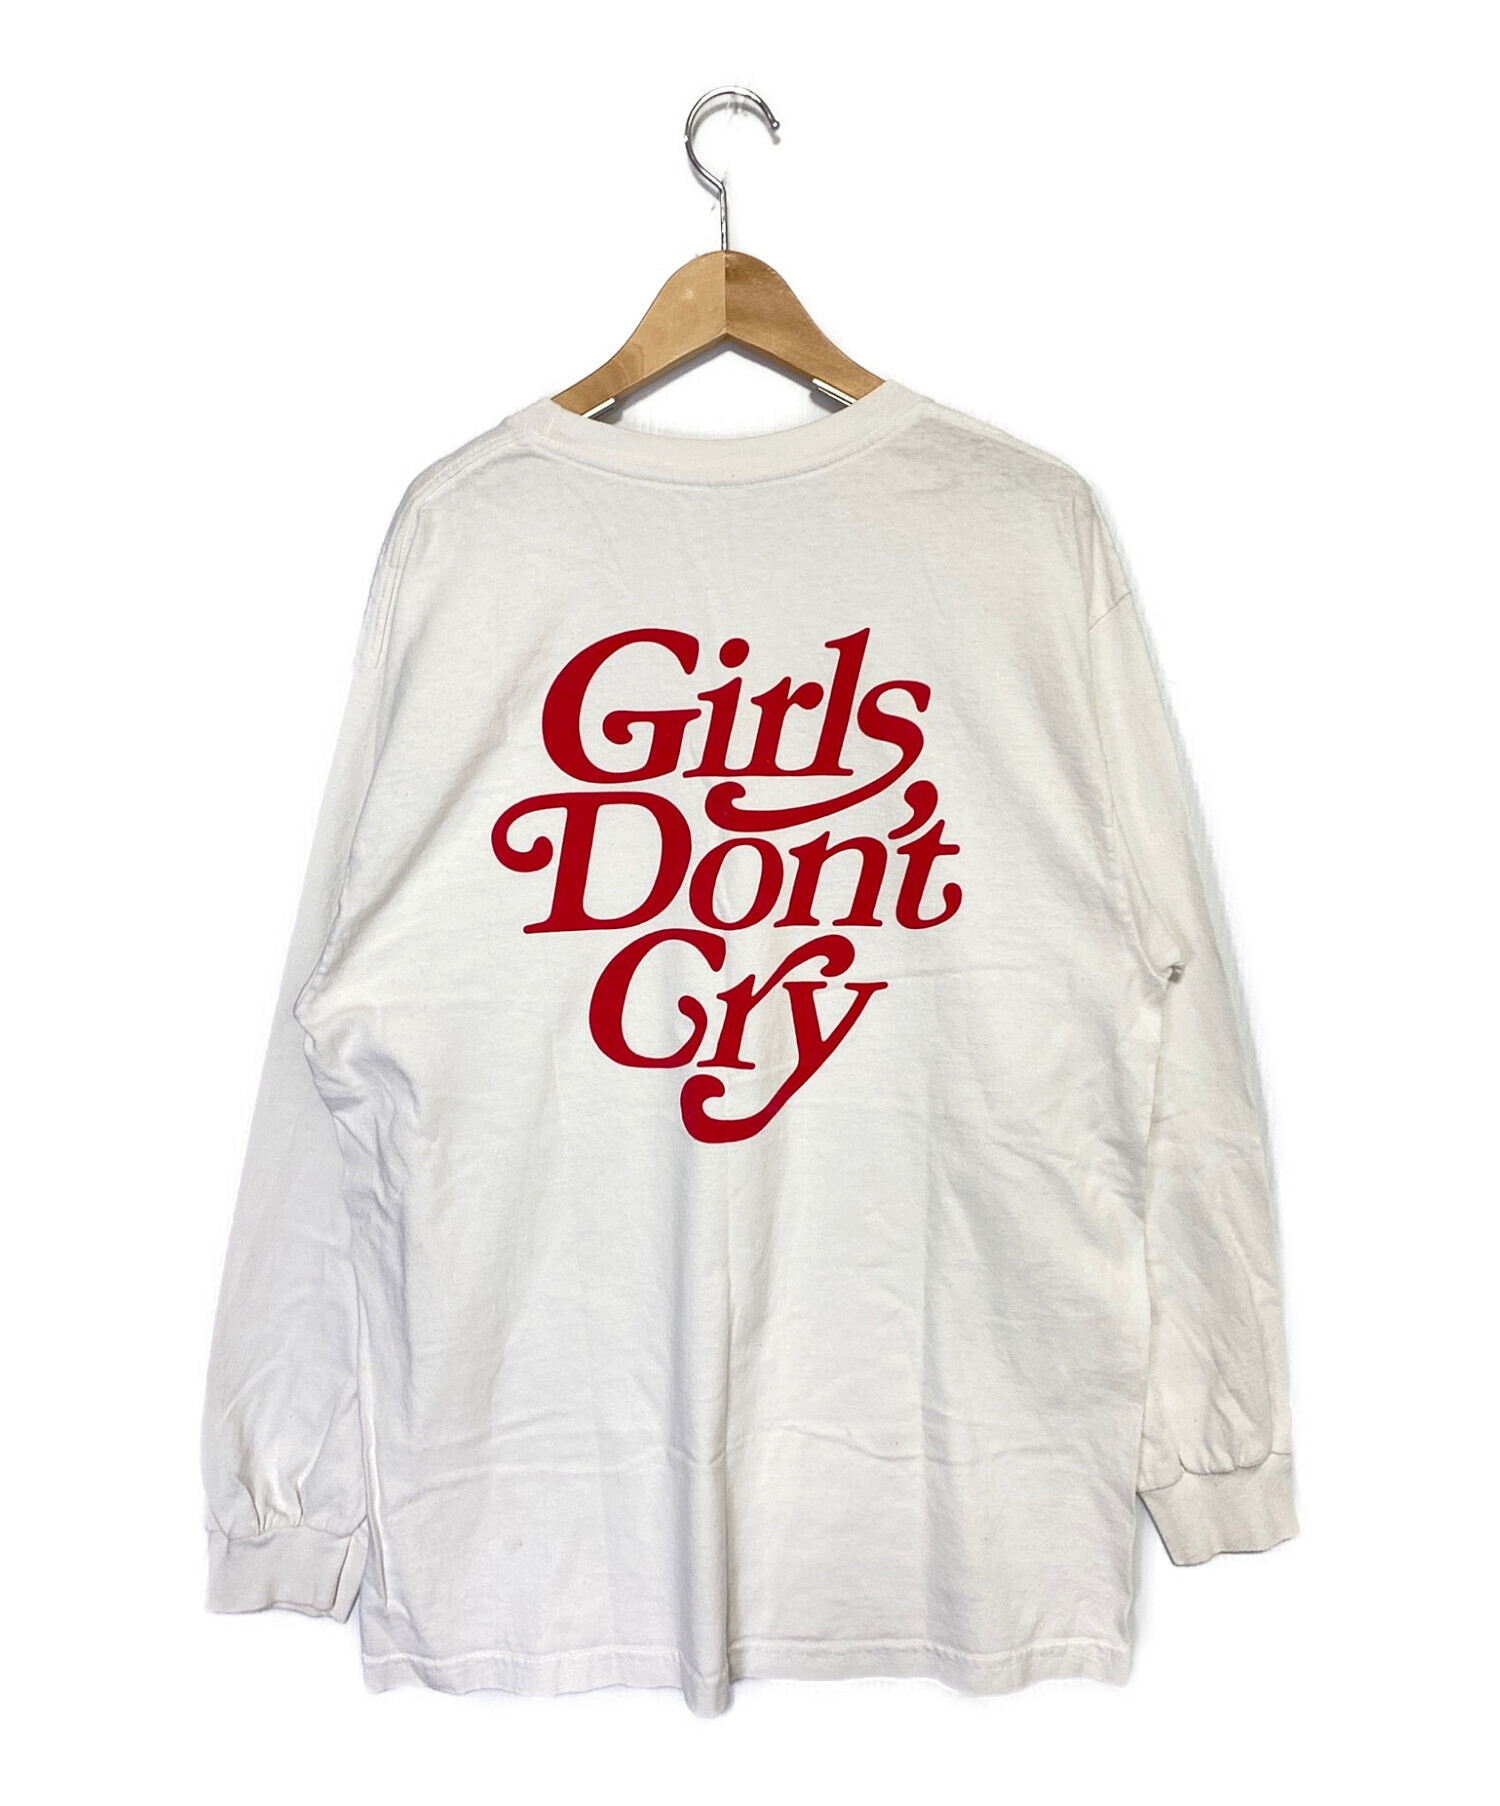 GirlsdonGirls don't cry ガールズドントクライ tシャツ L